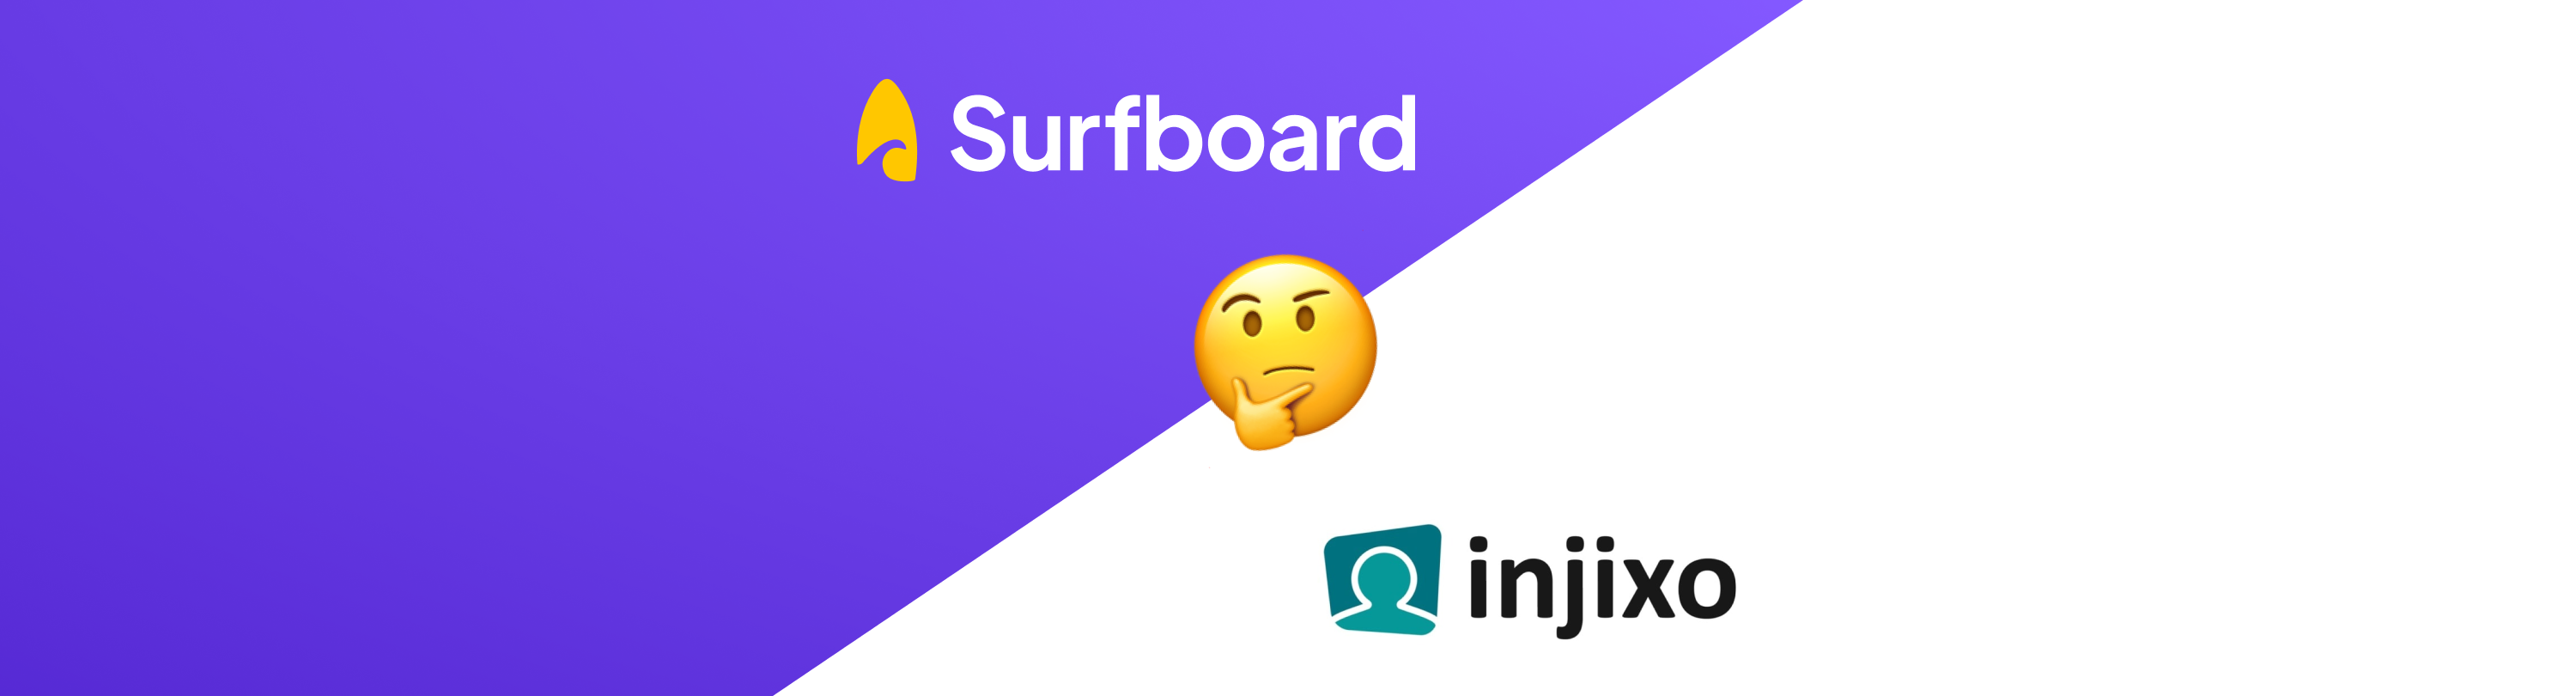 Surfboard and Injixo logos